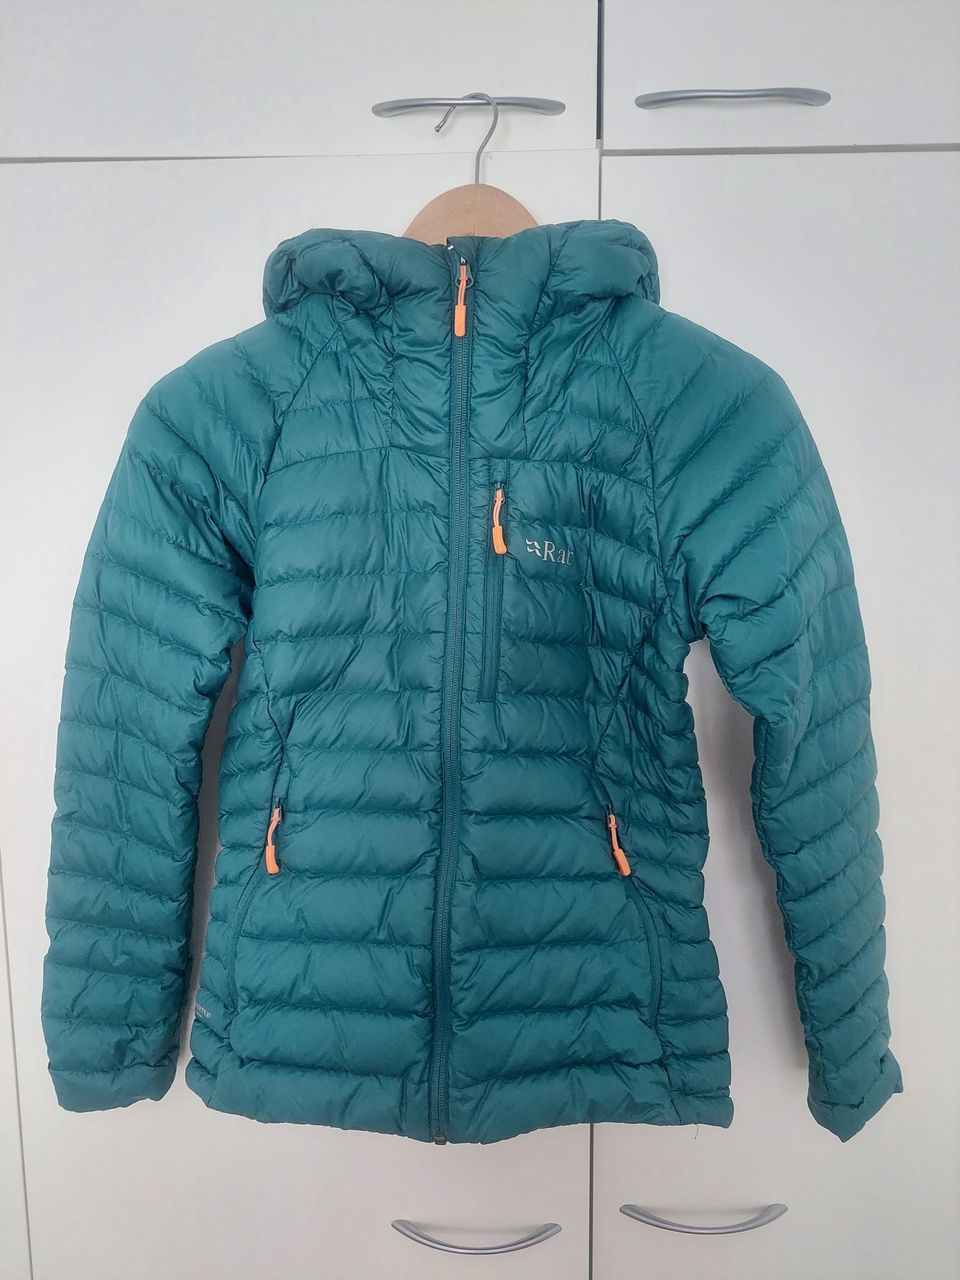 Rab Microlight Alpine jacket